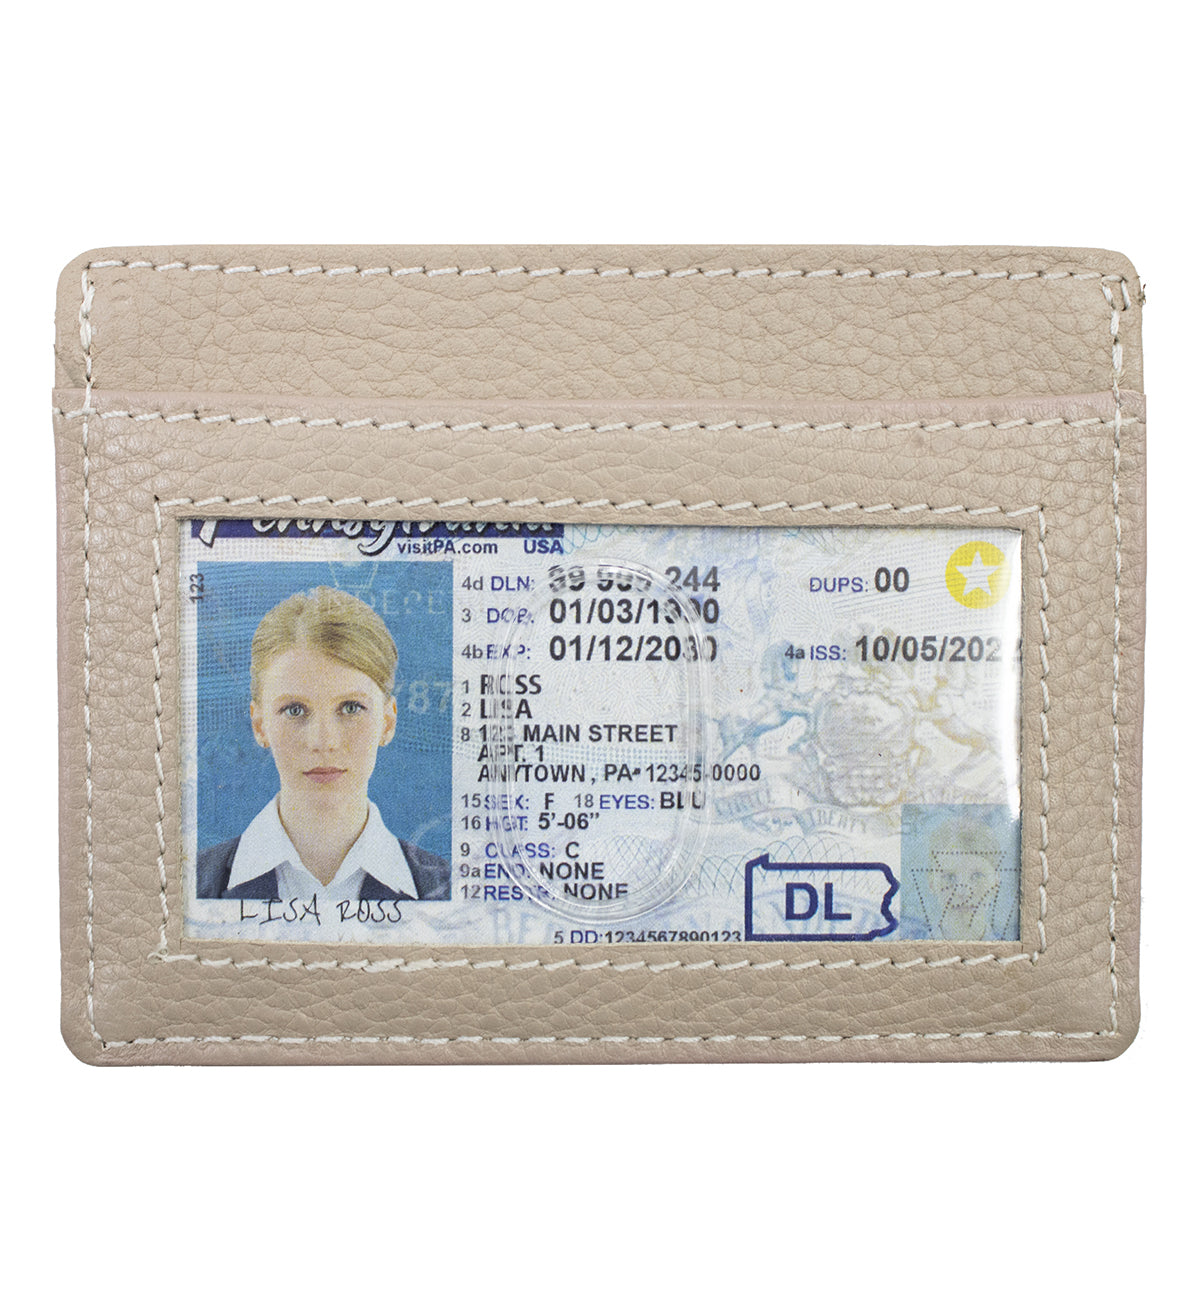 RFID Blocking Genuine Leather Slim Wallet 2 Credit Card Case Minimalist Front Pocket ID Holder